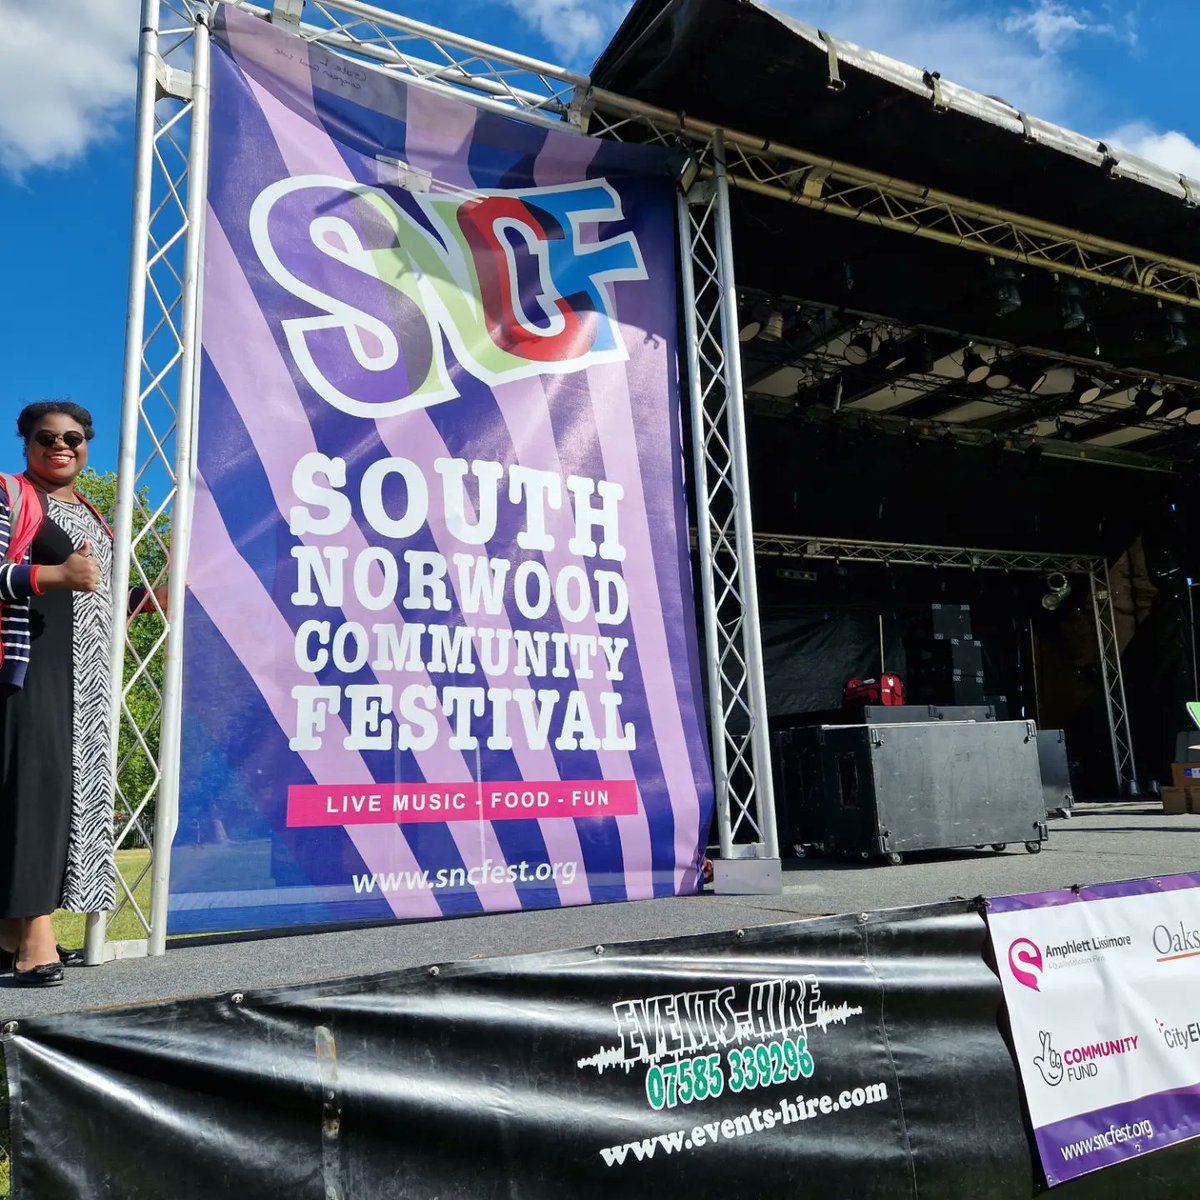 Looking forward to today's South Norwood Festival!!!
Sunday, 3 July 2022 from 11am
@SNCFest

#SouthNorwood #croydon #croydonmusic #croydonlife #croydonmums #croydonbusiness #croydonart #festivalfun #community #communityfirst